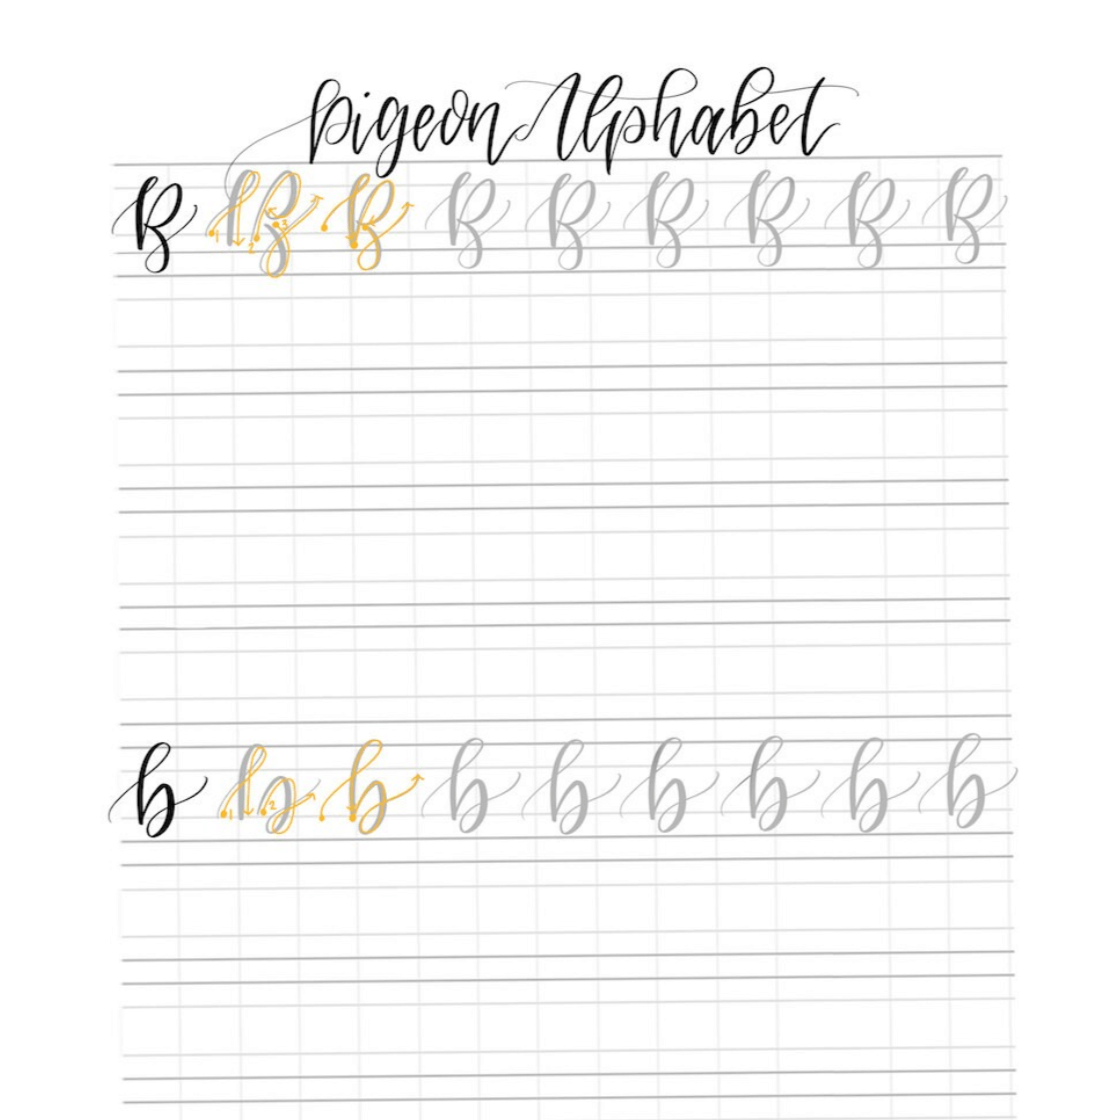 alphabet practice sheets